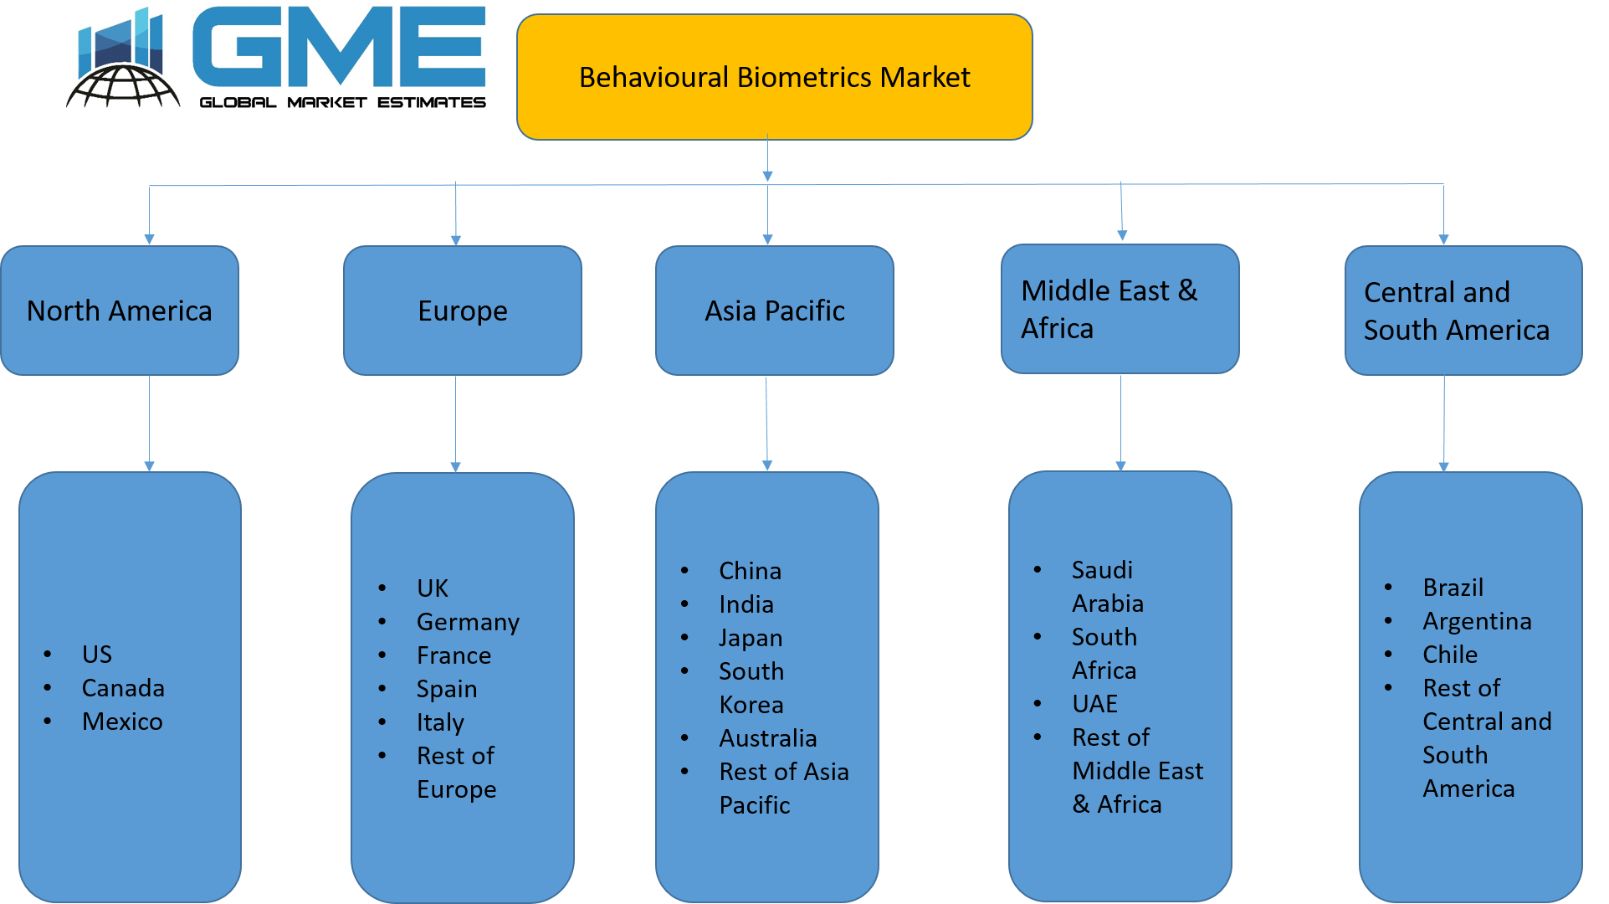 Behavioural Biometrics Market - Regional Analysis